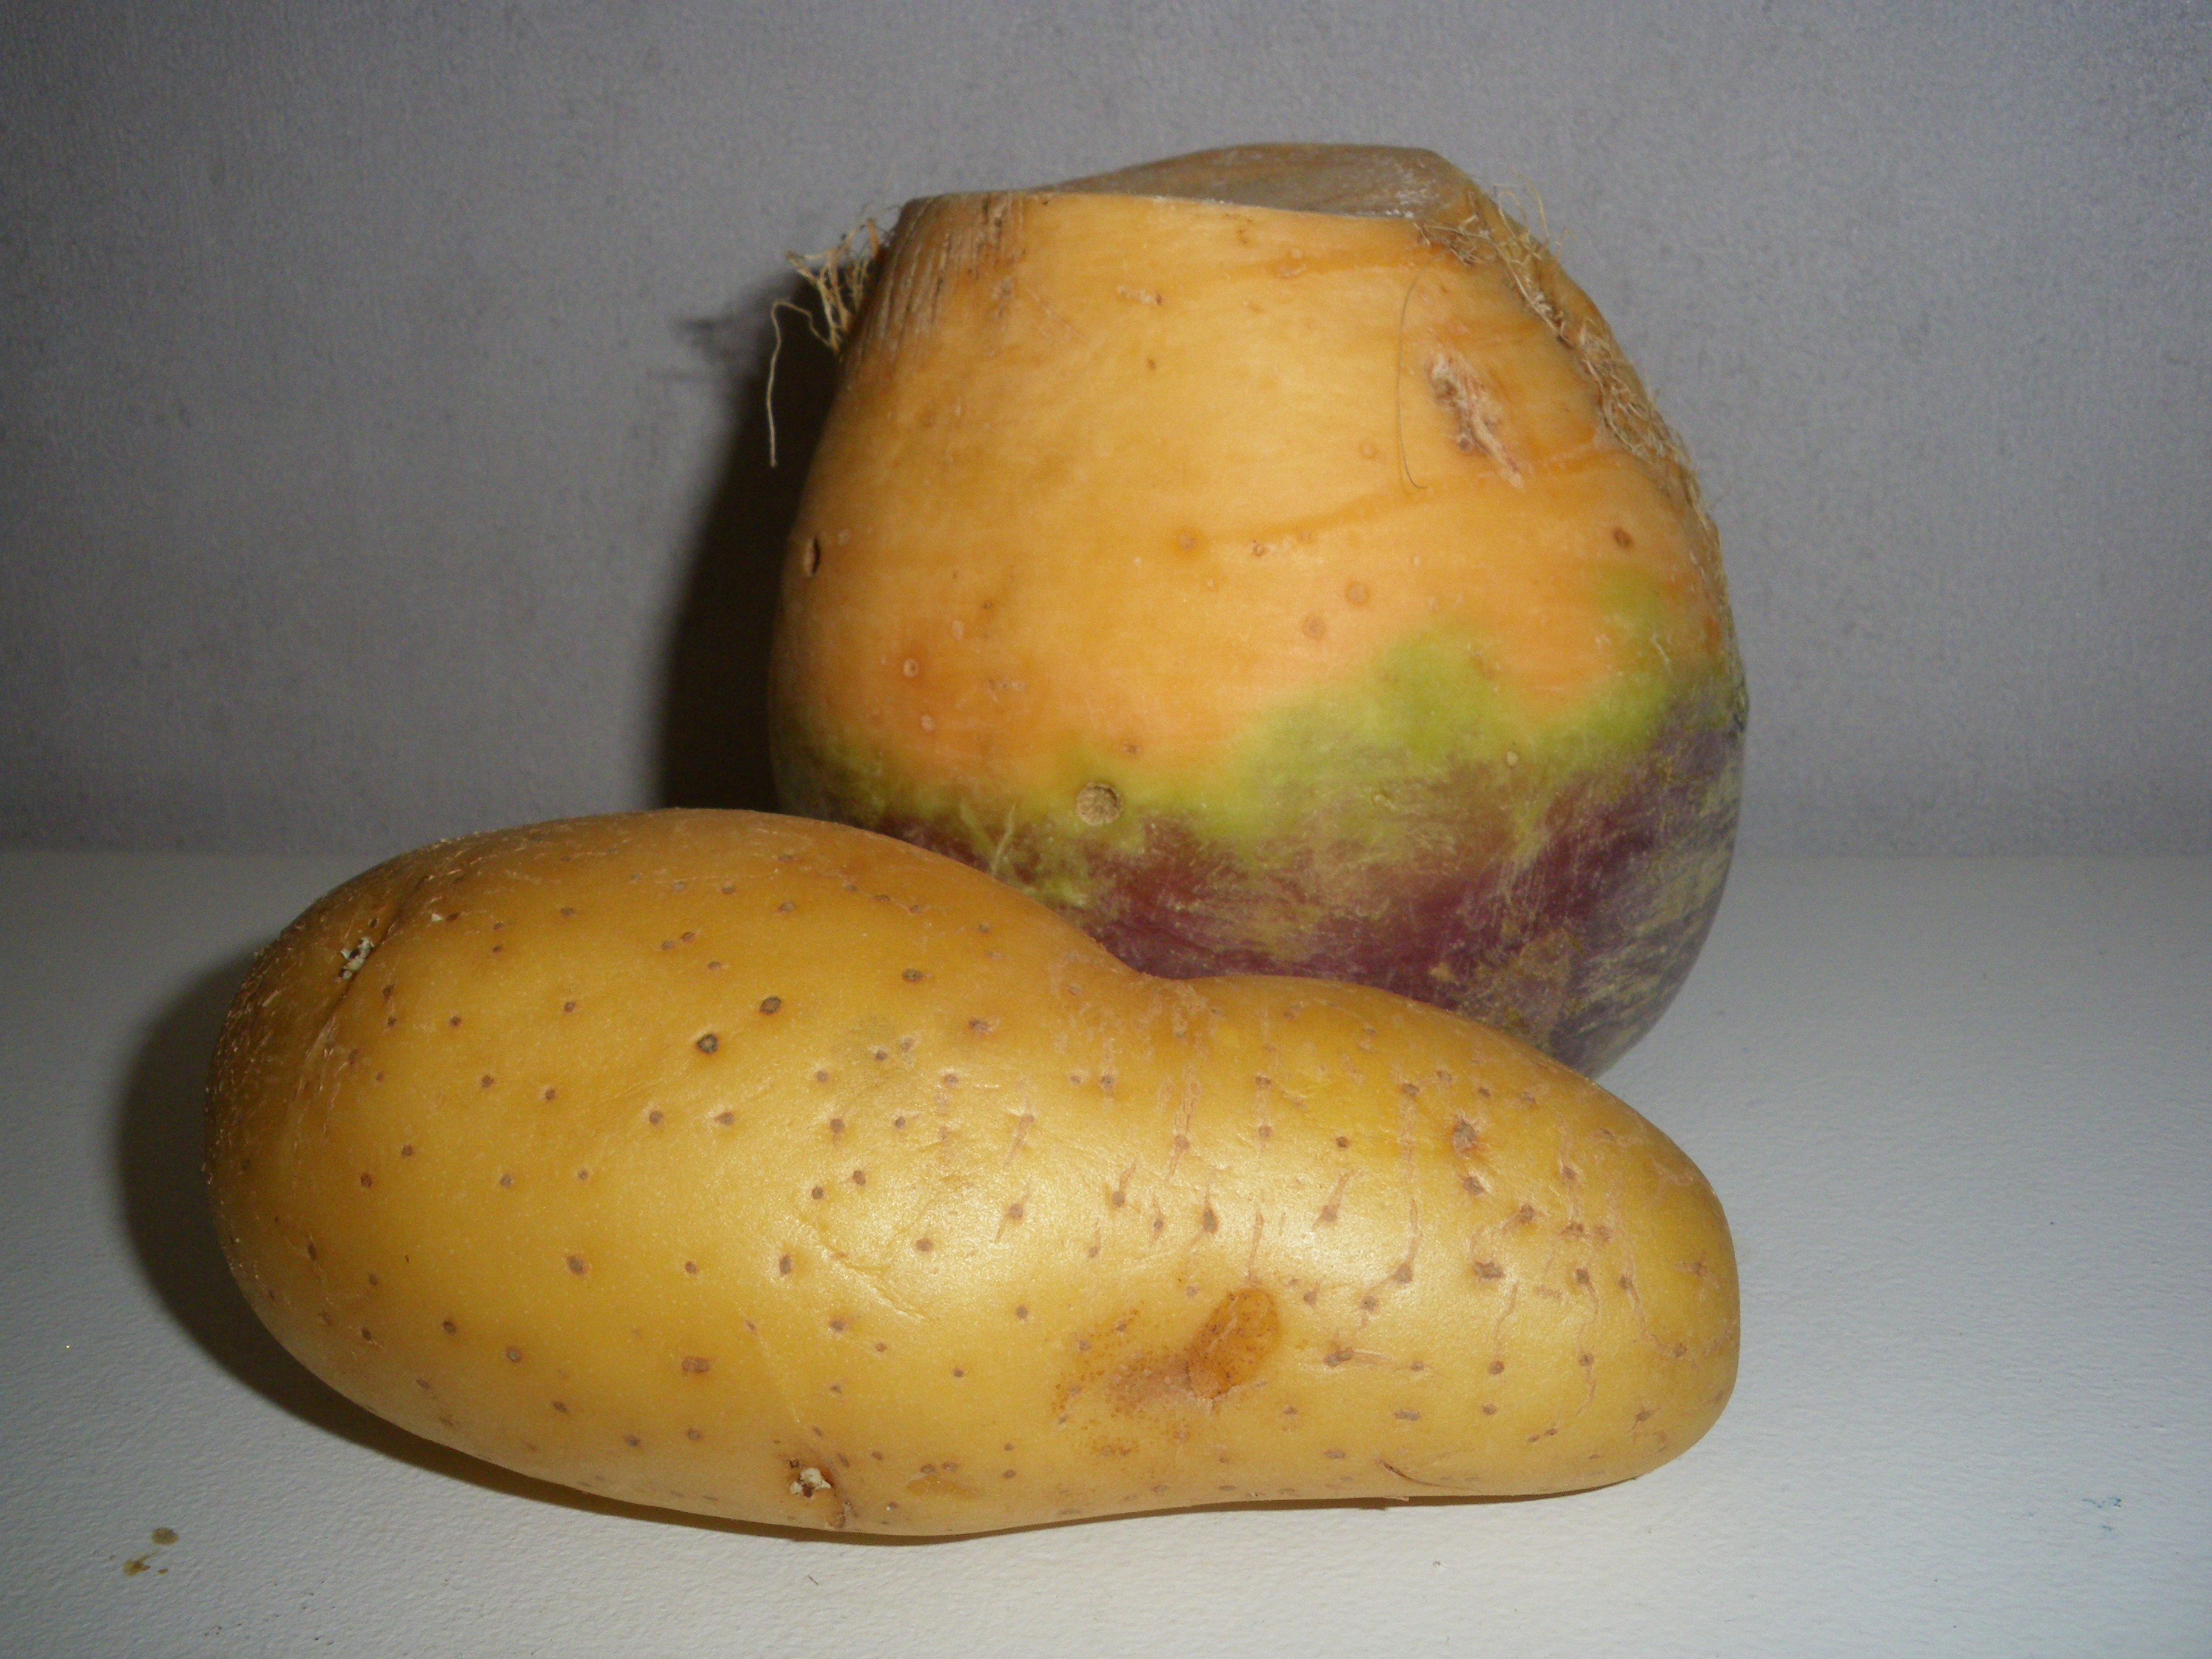 Rutabaga pomme de terre